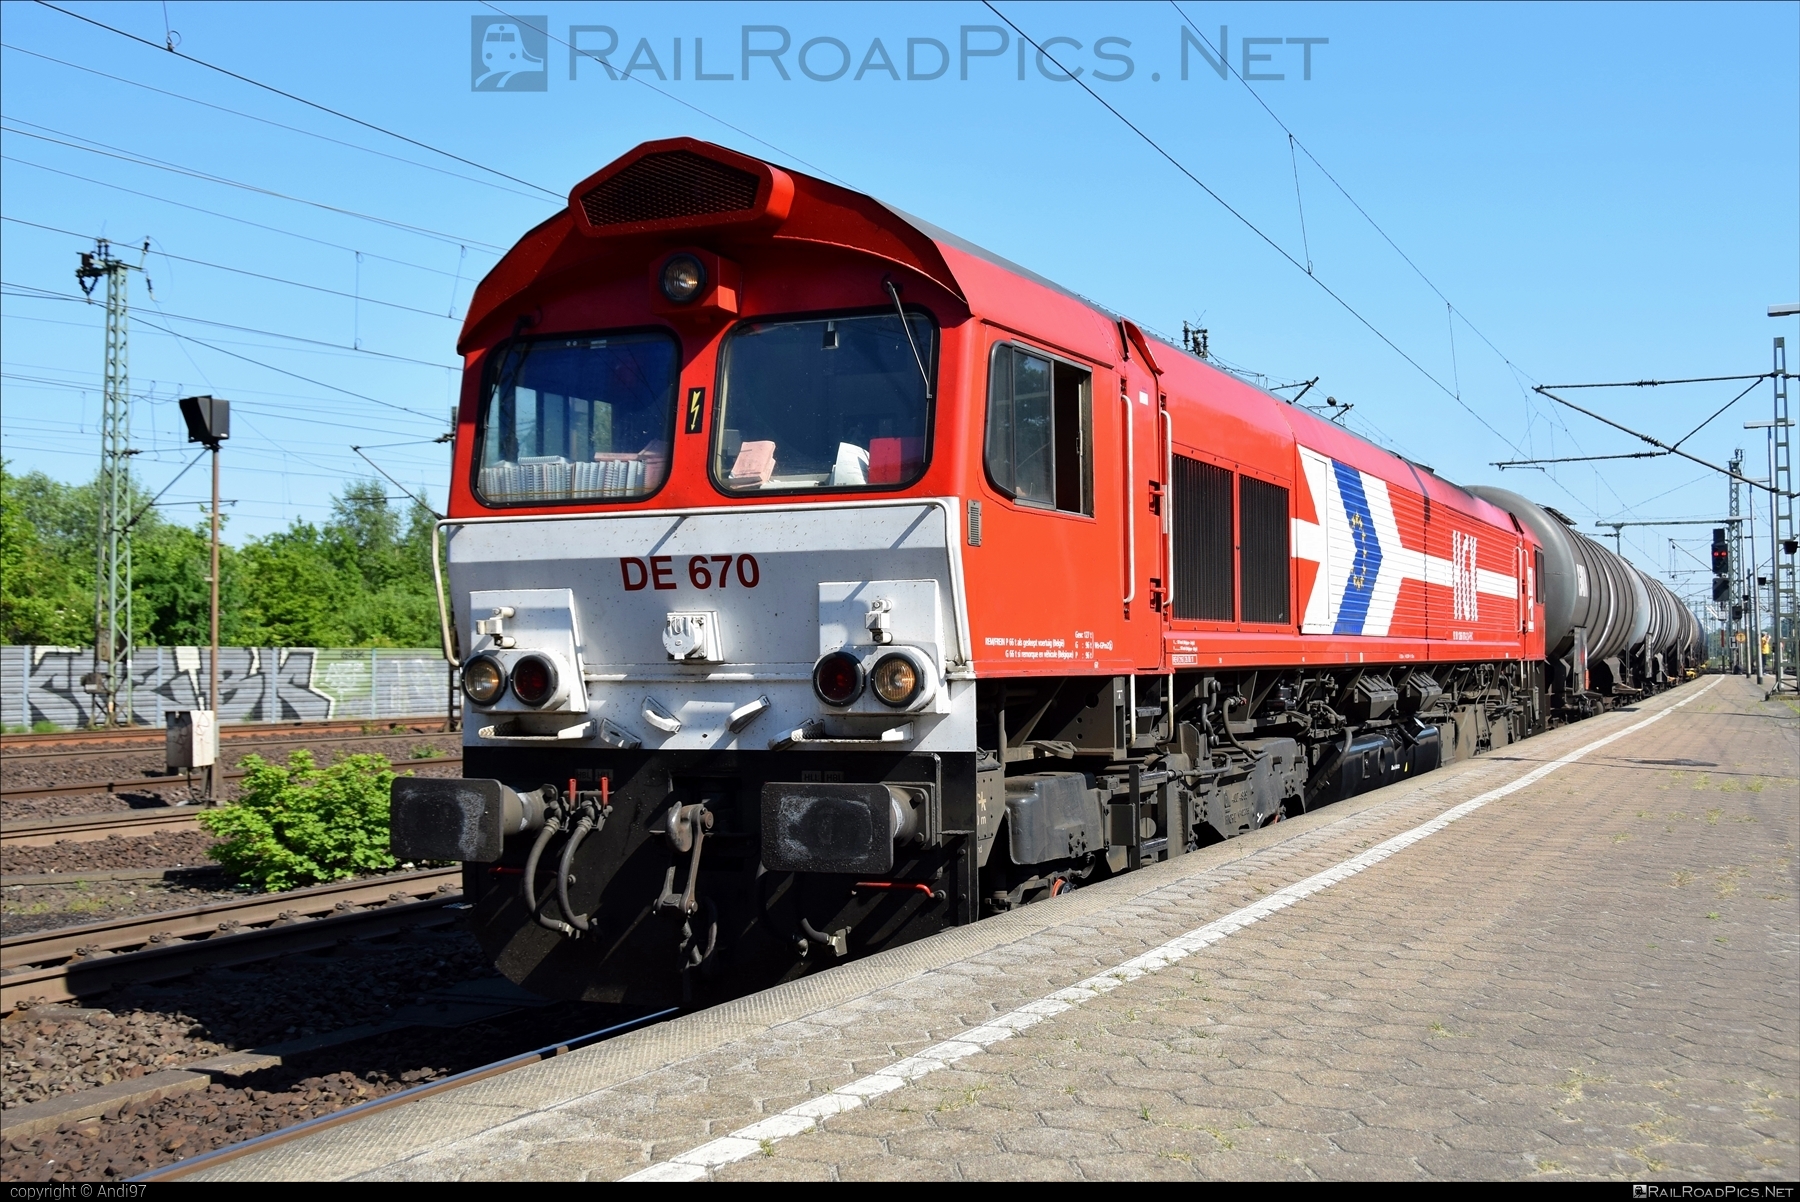 EMD JT42CWRM - 266 070 operated by Häfen und Güterverkehr Köln #brClass66 #emd #emdClass66 #emdJt42cwrm #hgk